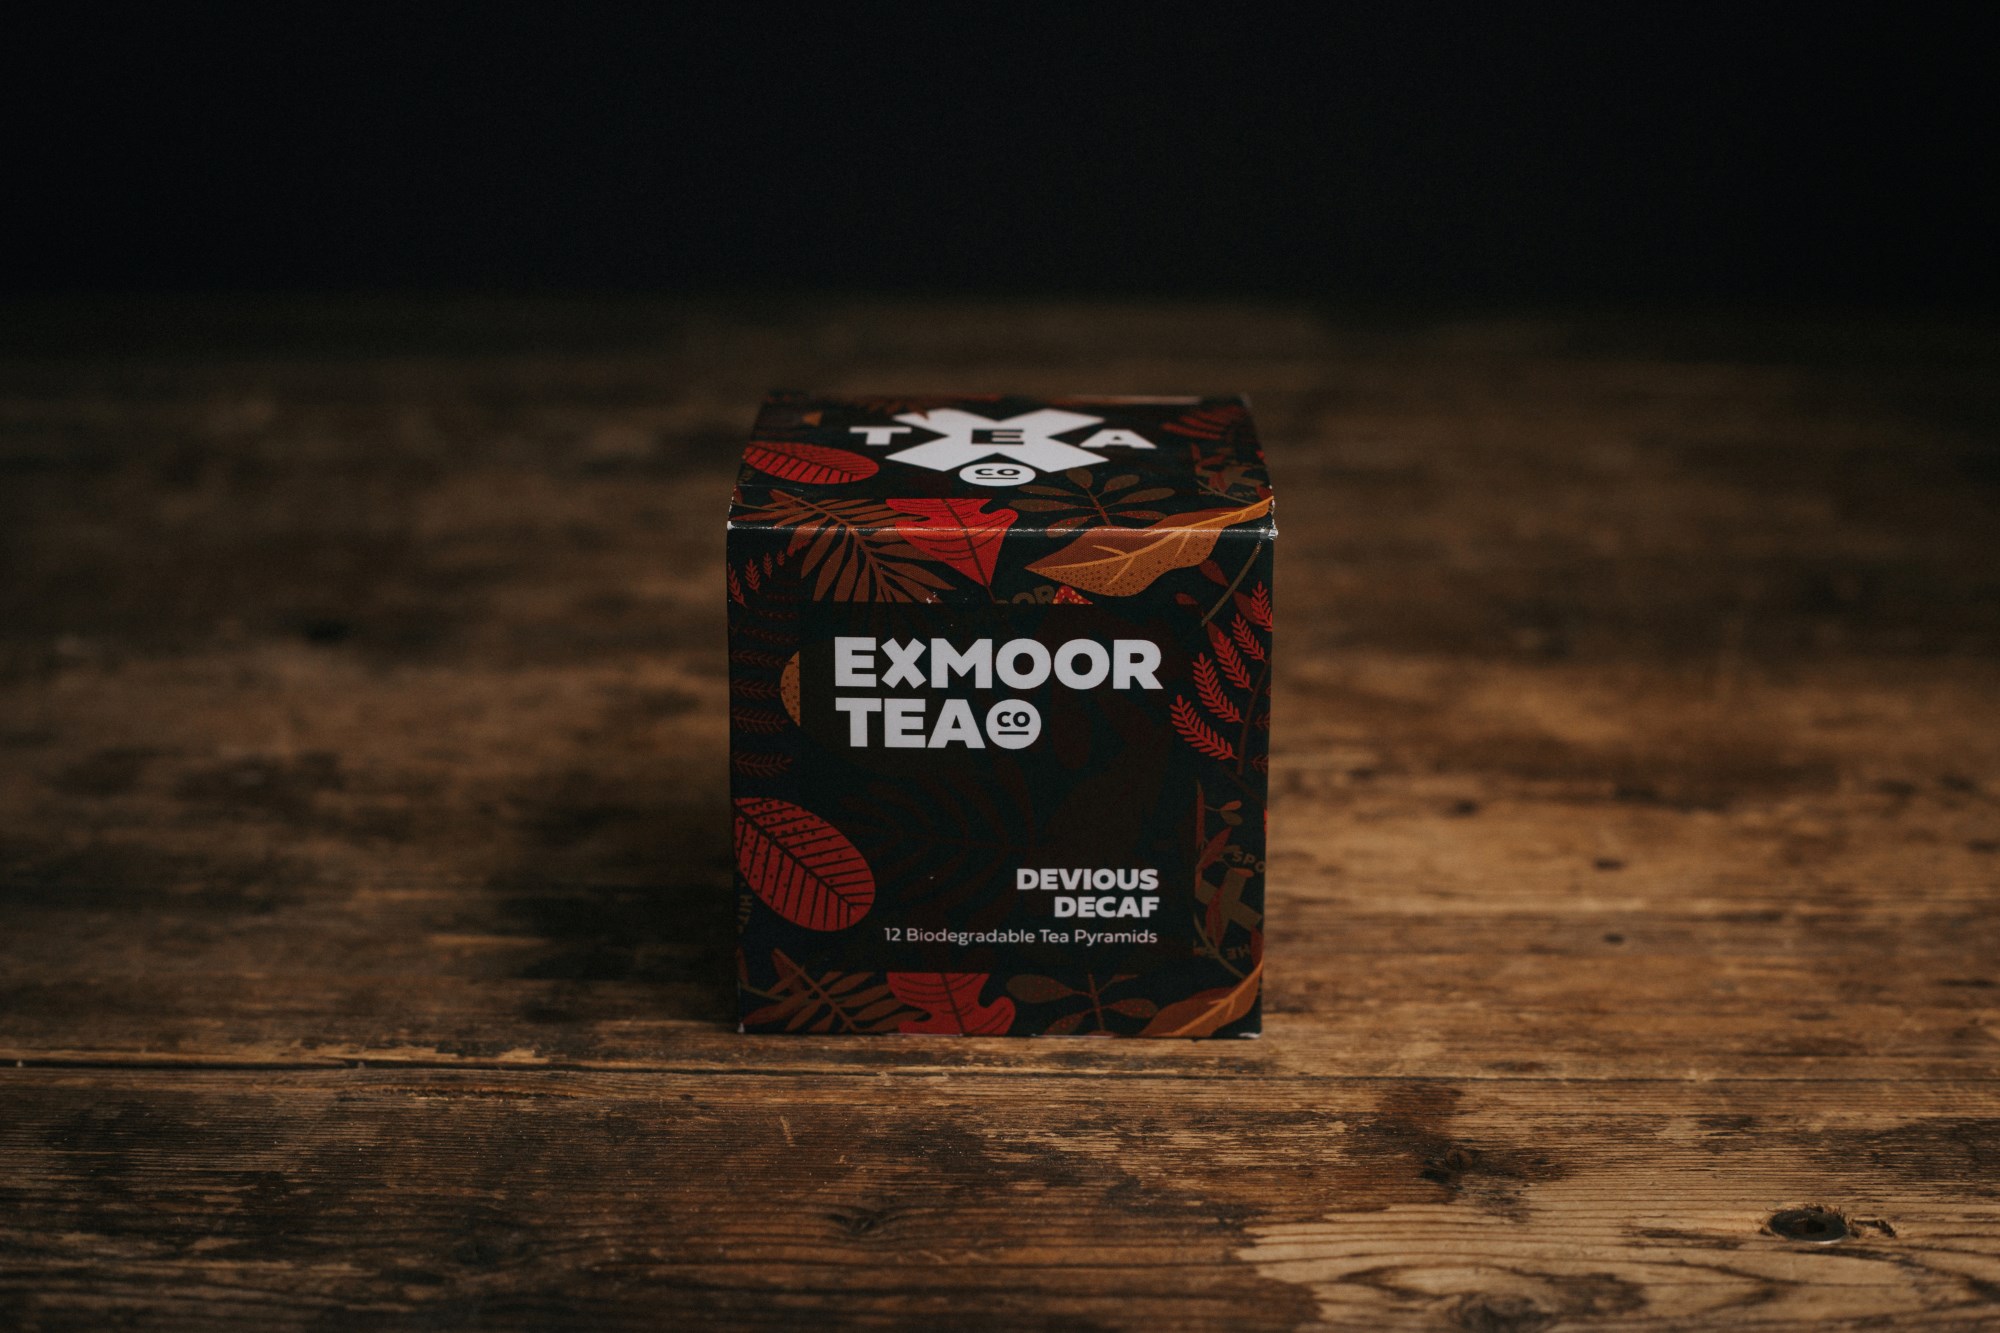 Exmoor Tea Co. Devious Decaf Tea Pyramids